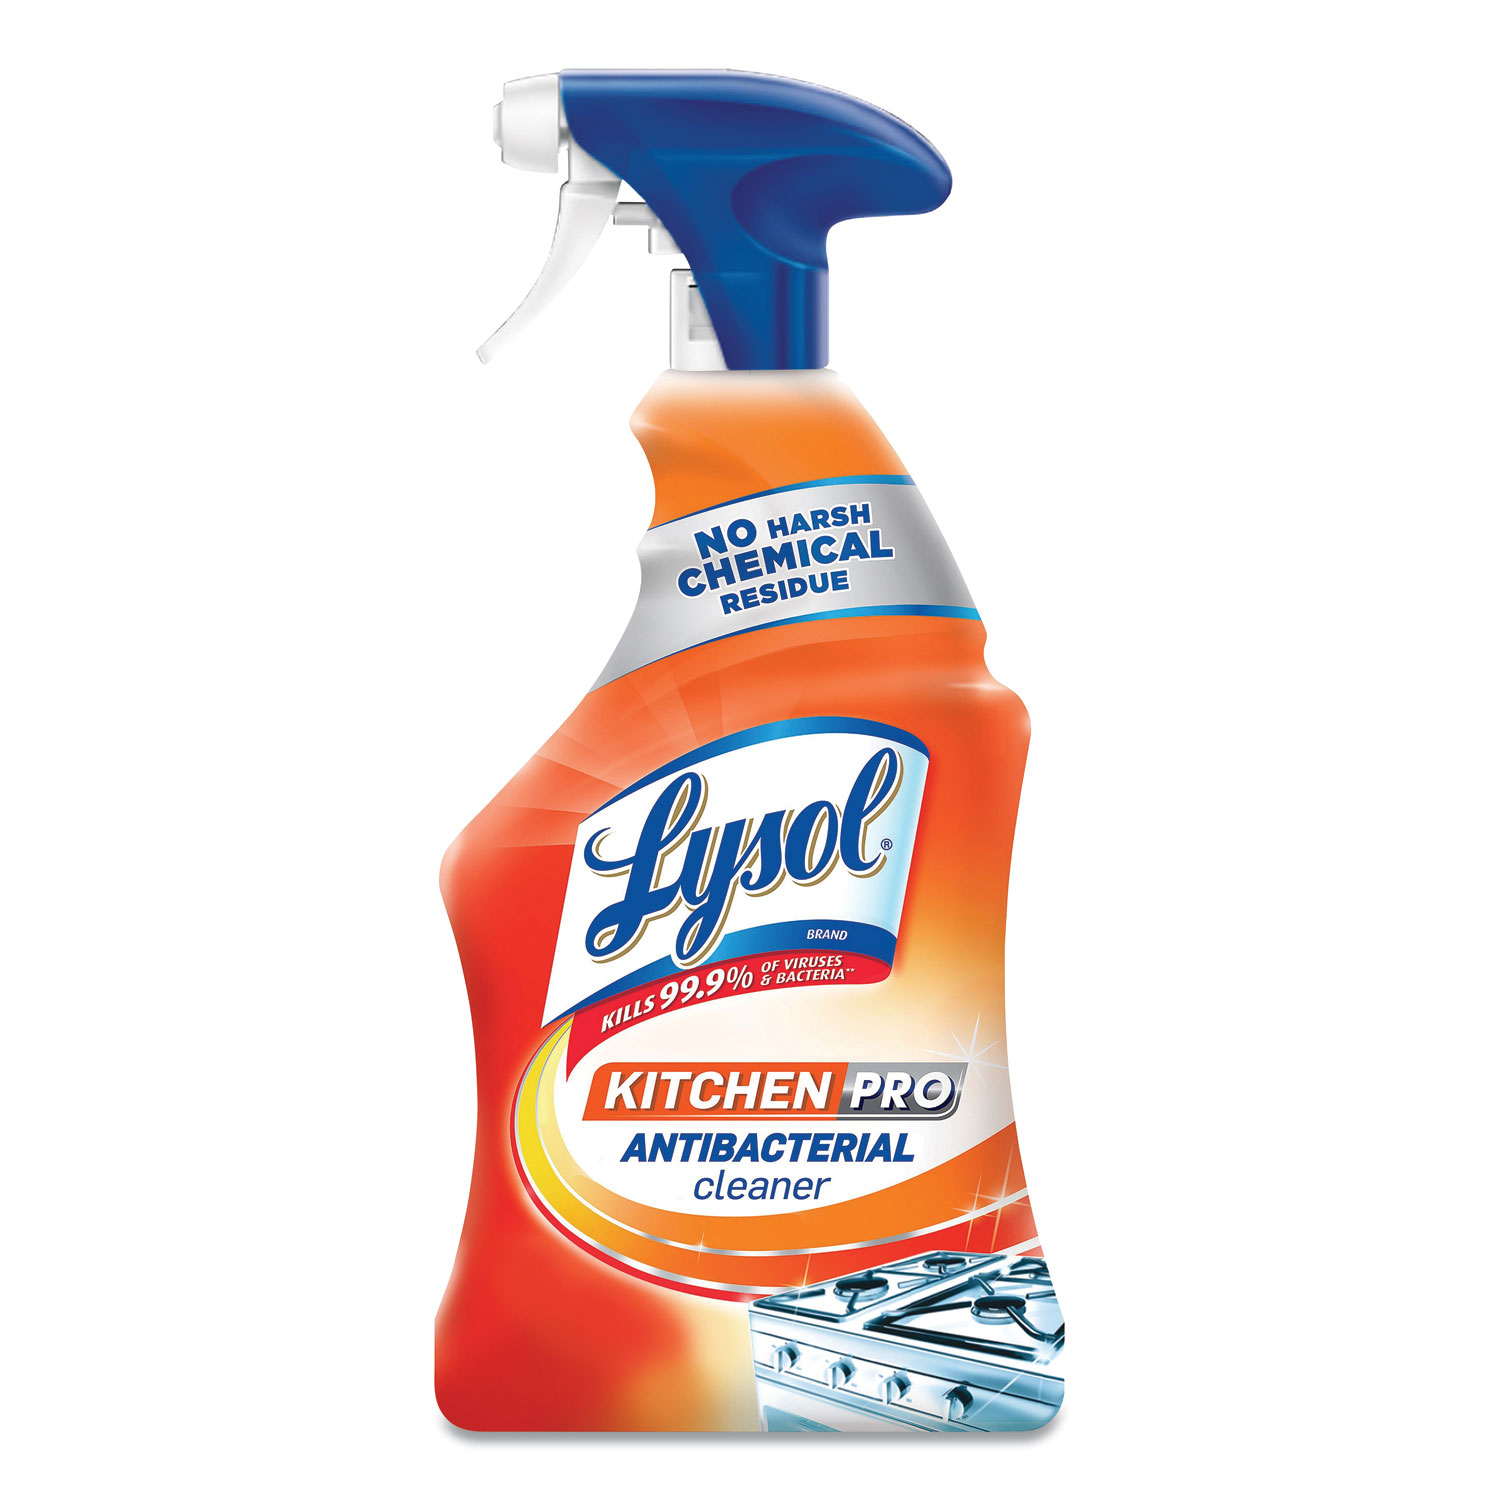 LYSOL Brand Kitchen Pro Antibacterial Cleaner, Citrus Scent, 22 oz ...
